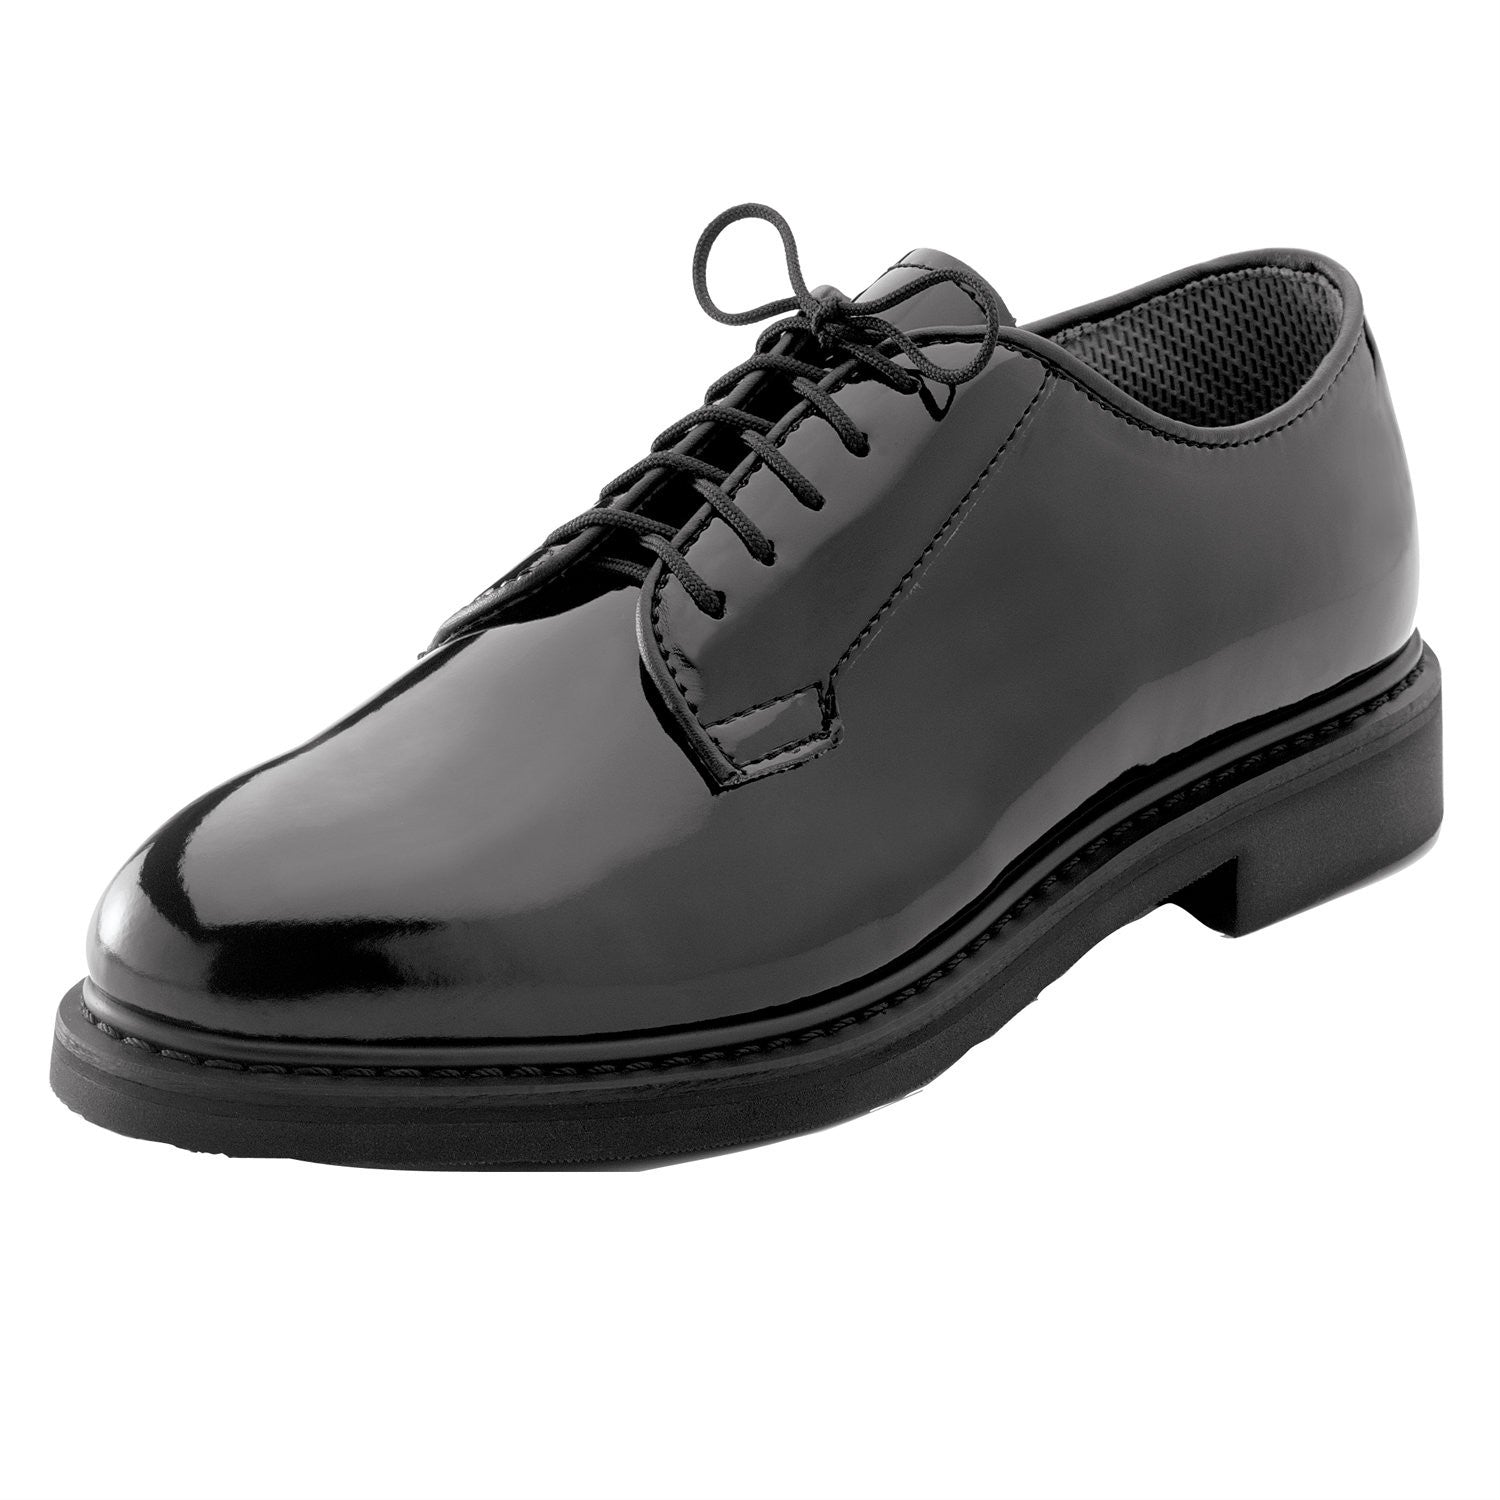 Leather Military Uniform Oxford Dress Shoe Black - Army Navy Gear